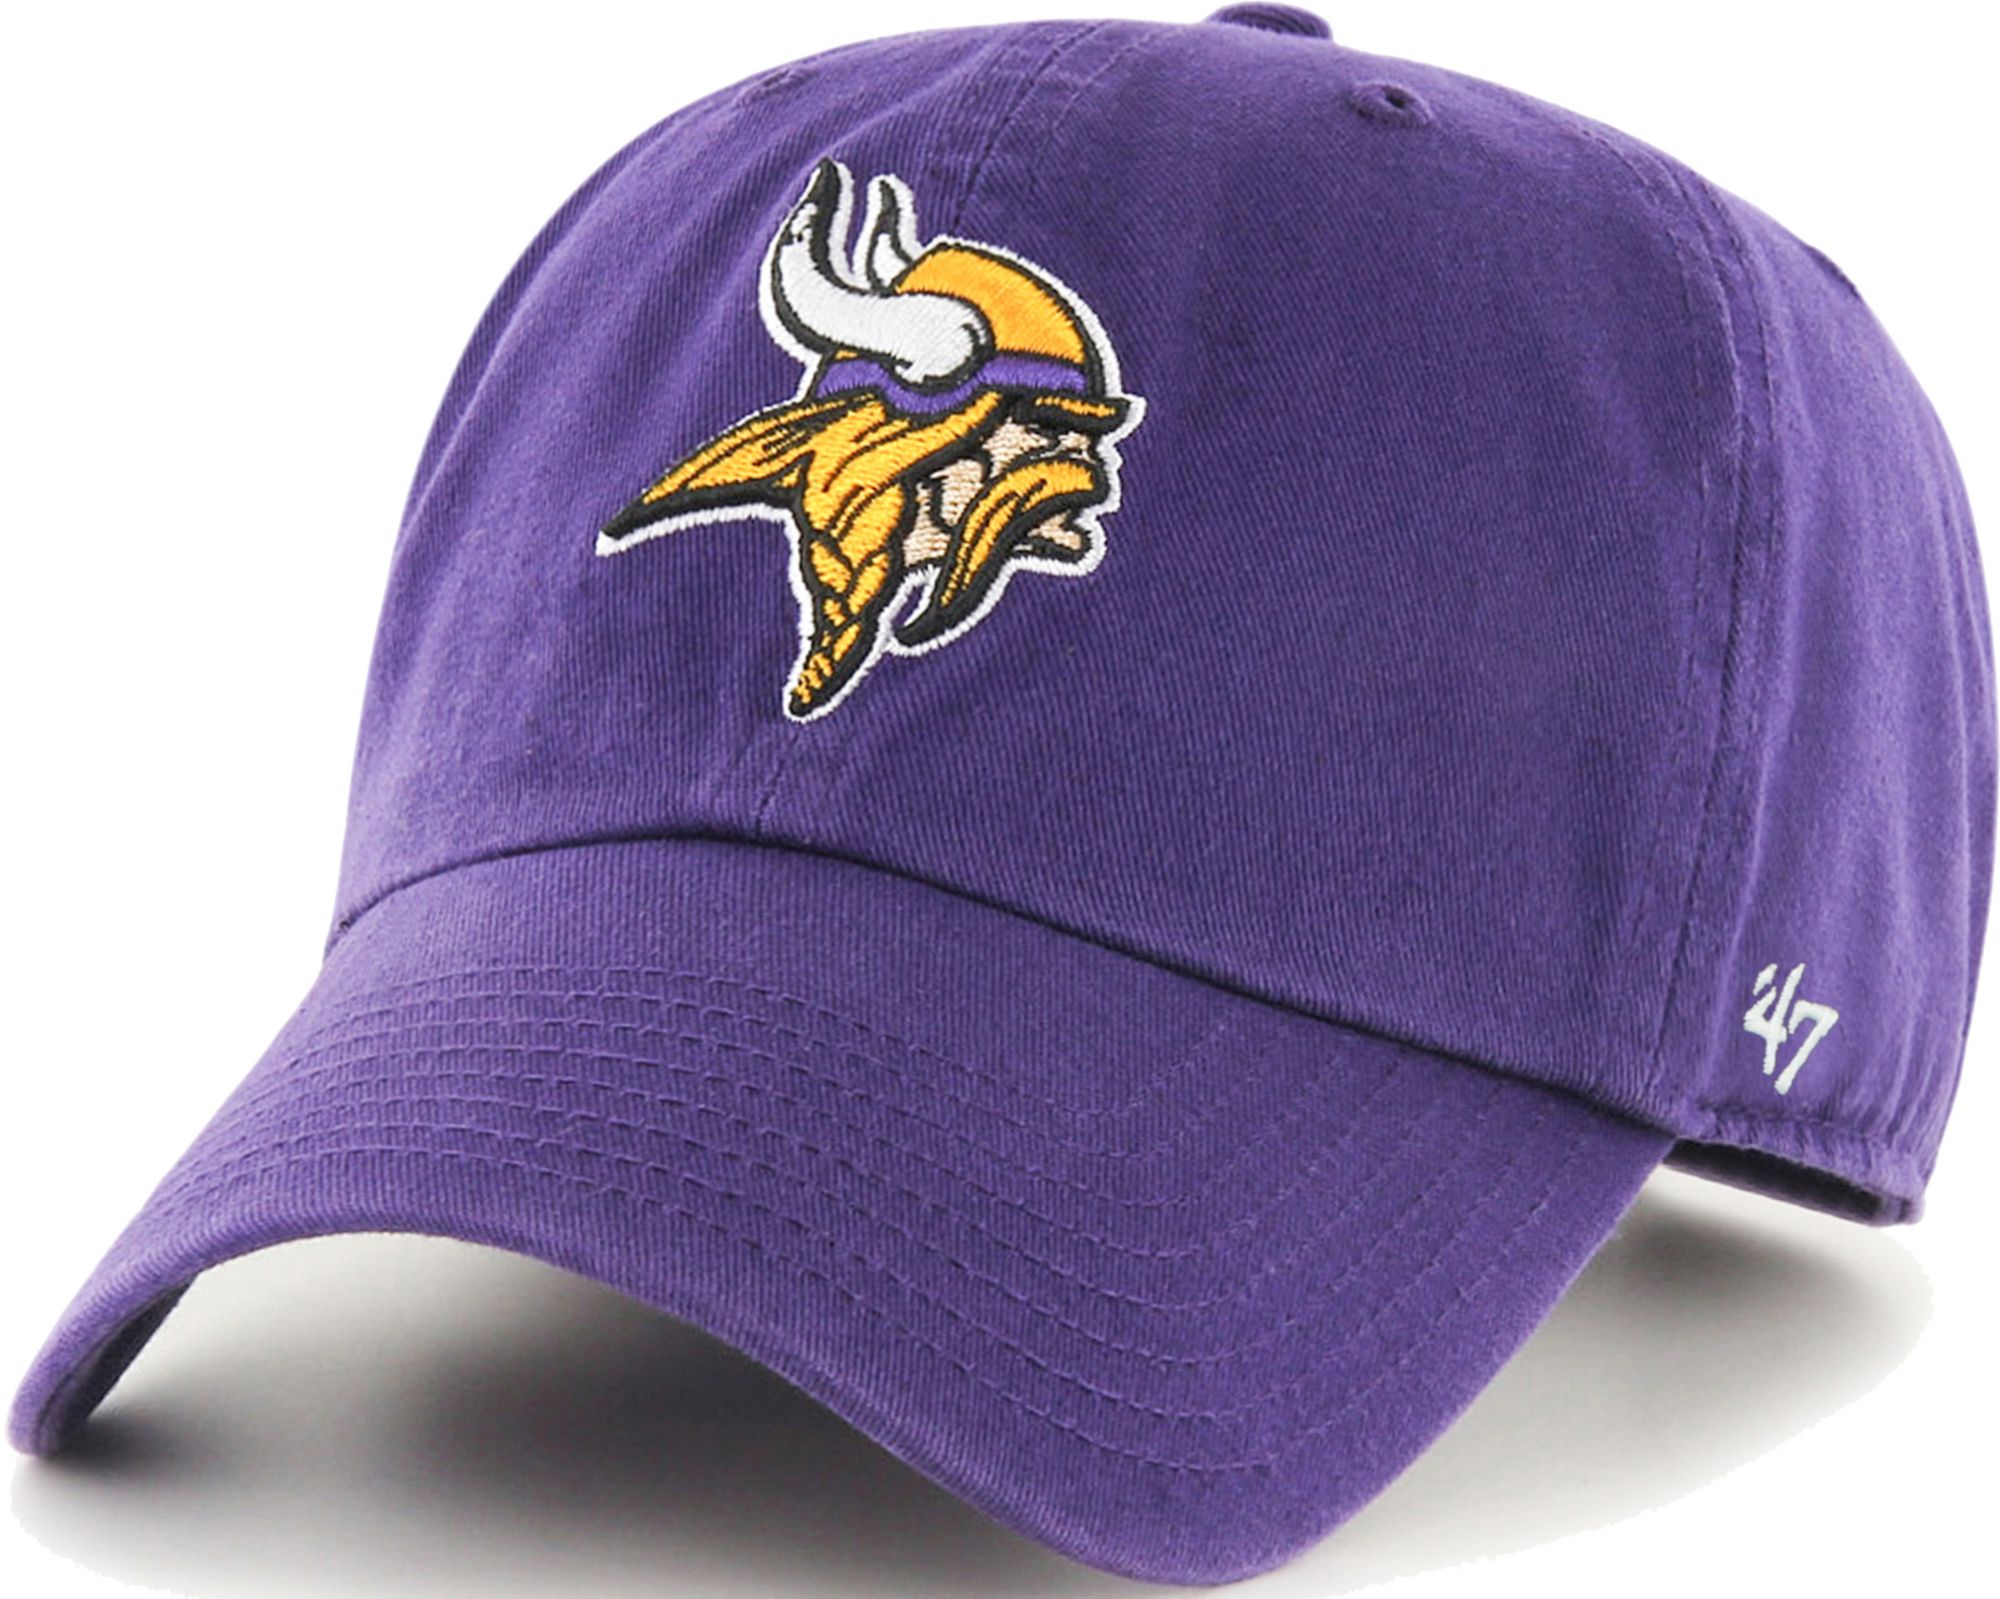 Minnesota Vikings official hat